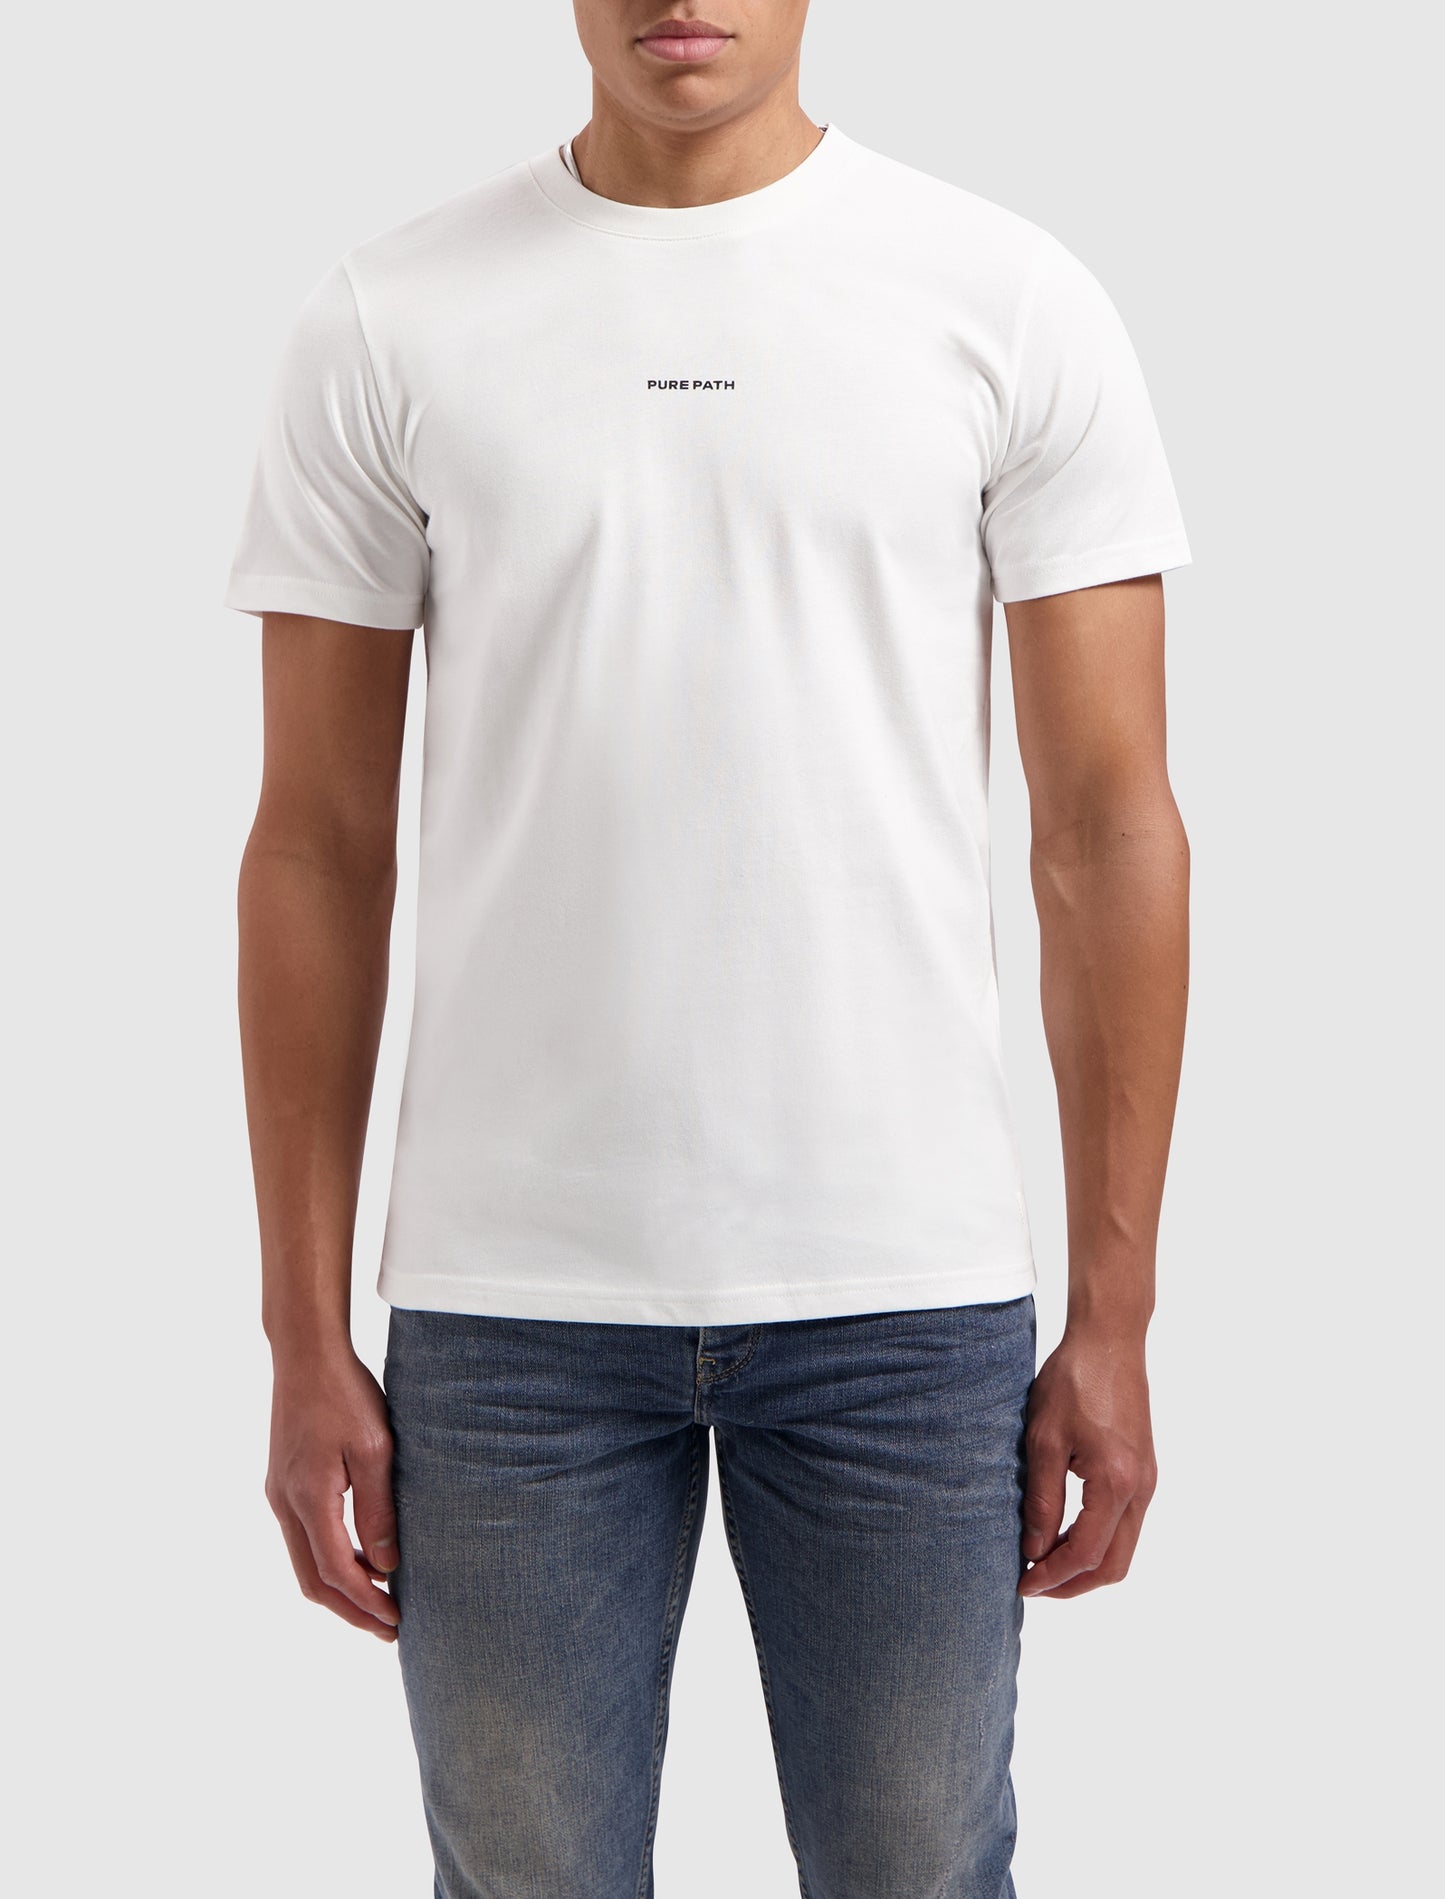 PURE PATH | Jardin Prive T-Shirt  - White